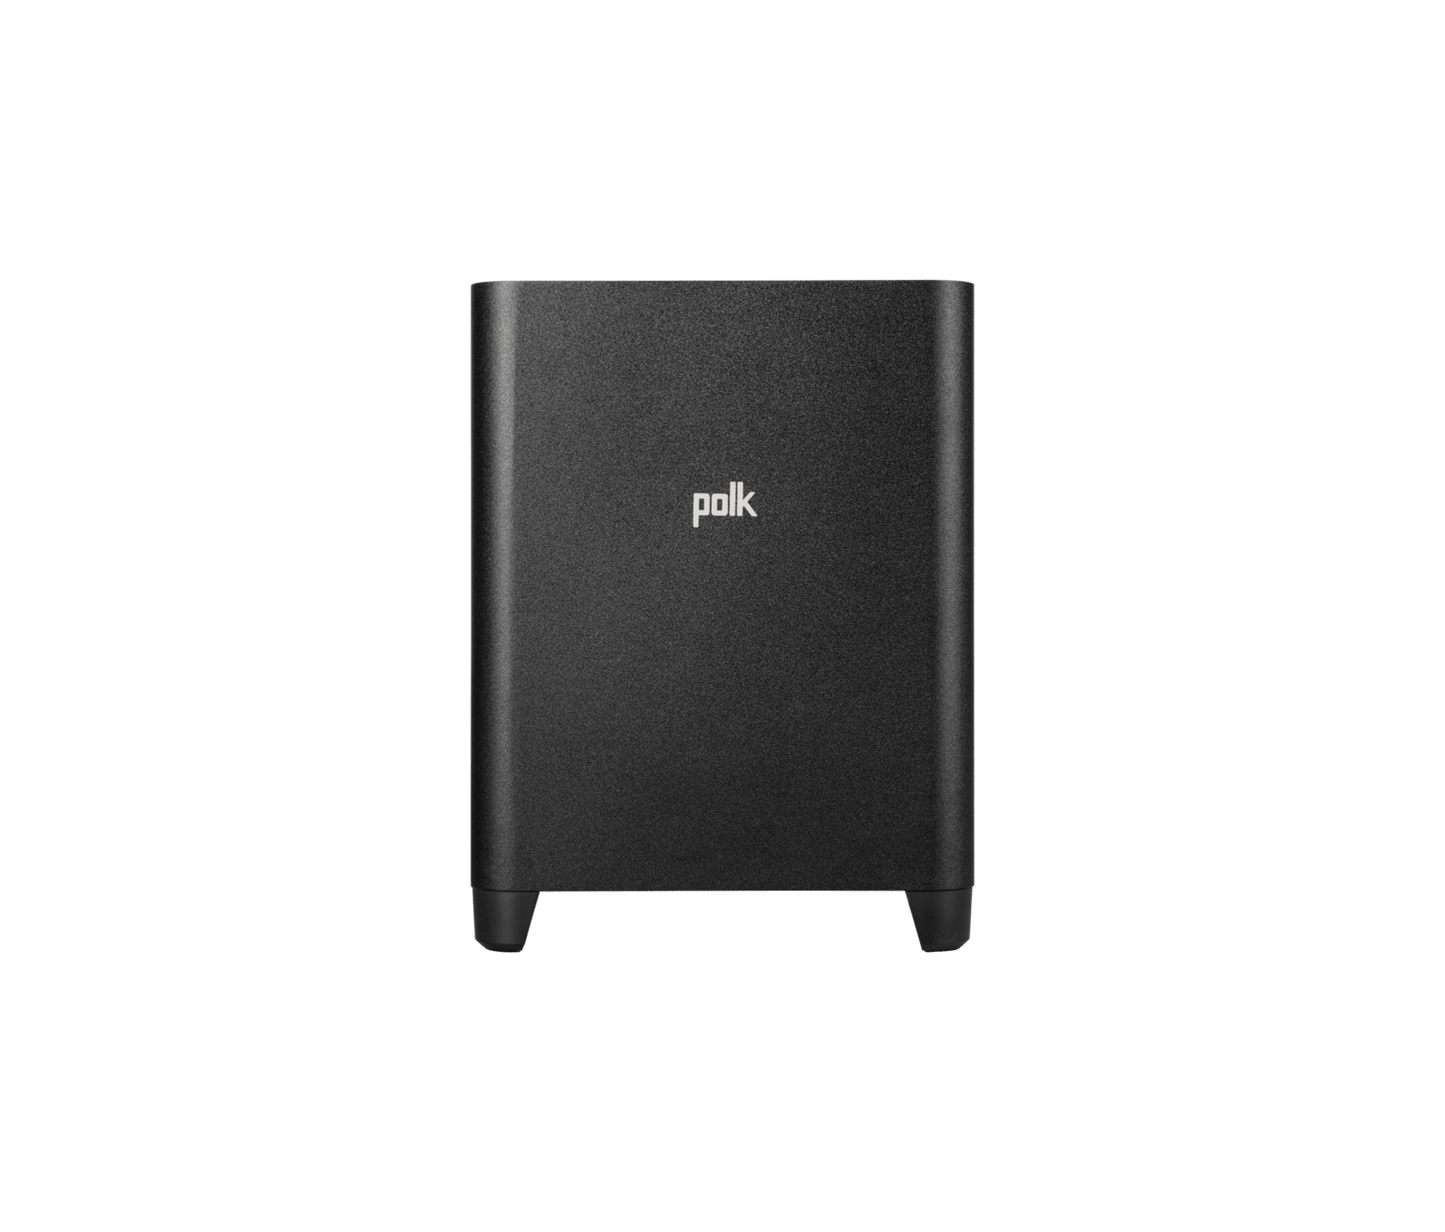 Polk Magnifi Max AXSR 7.1.2 Soundbar System - Black